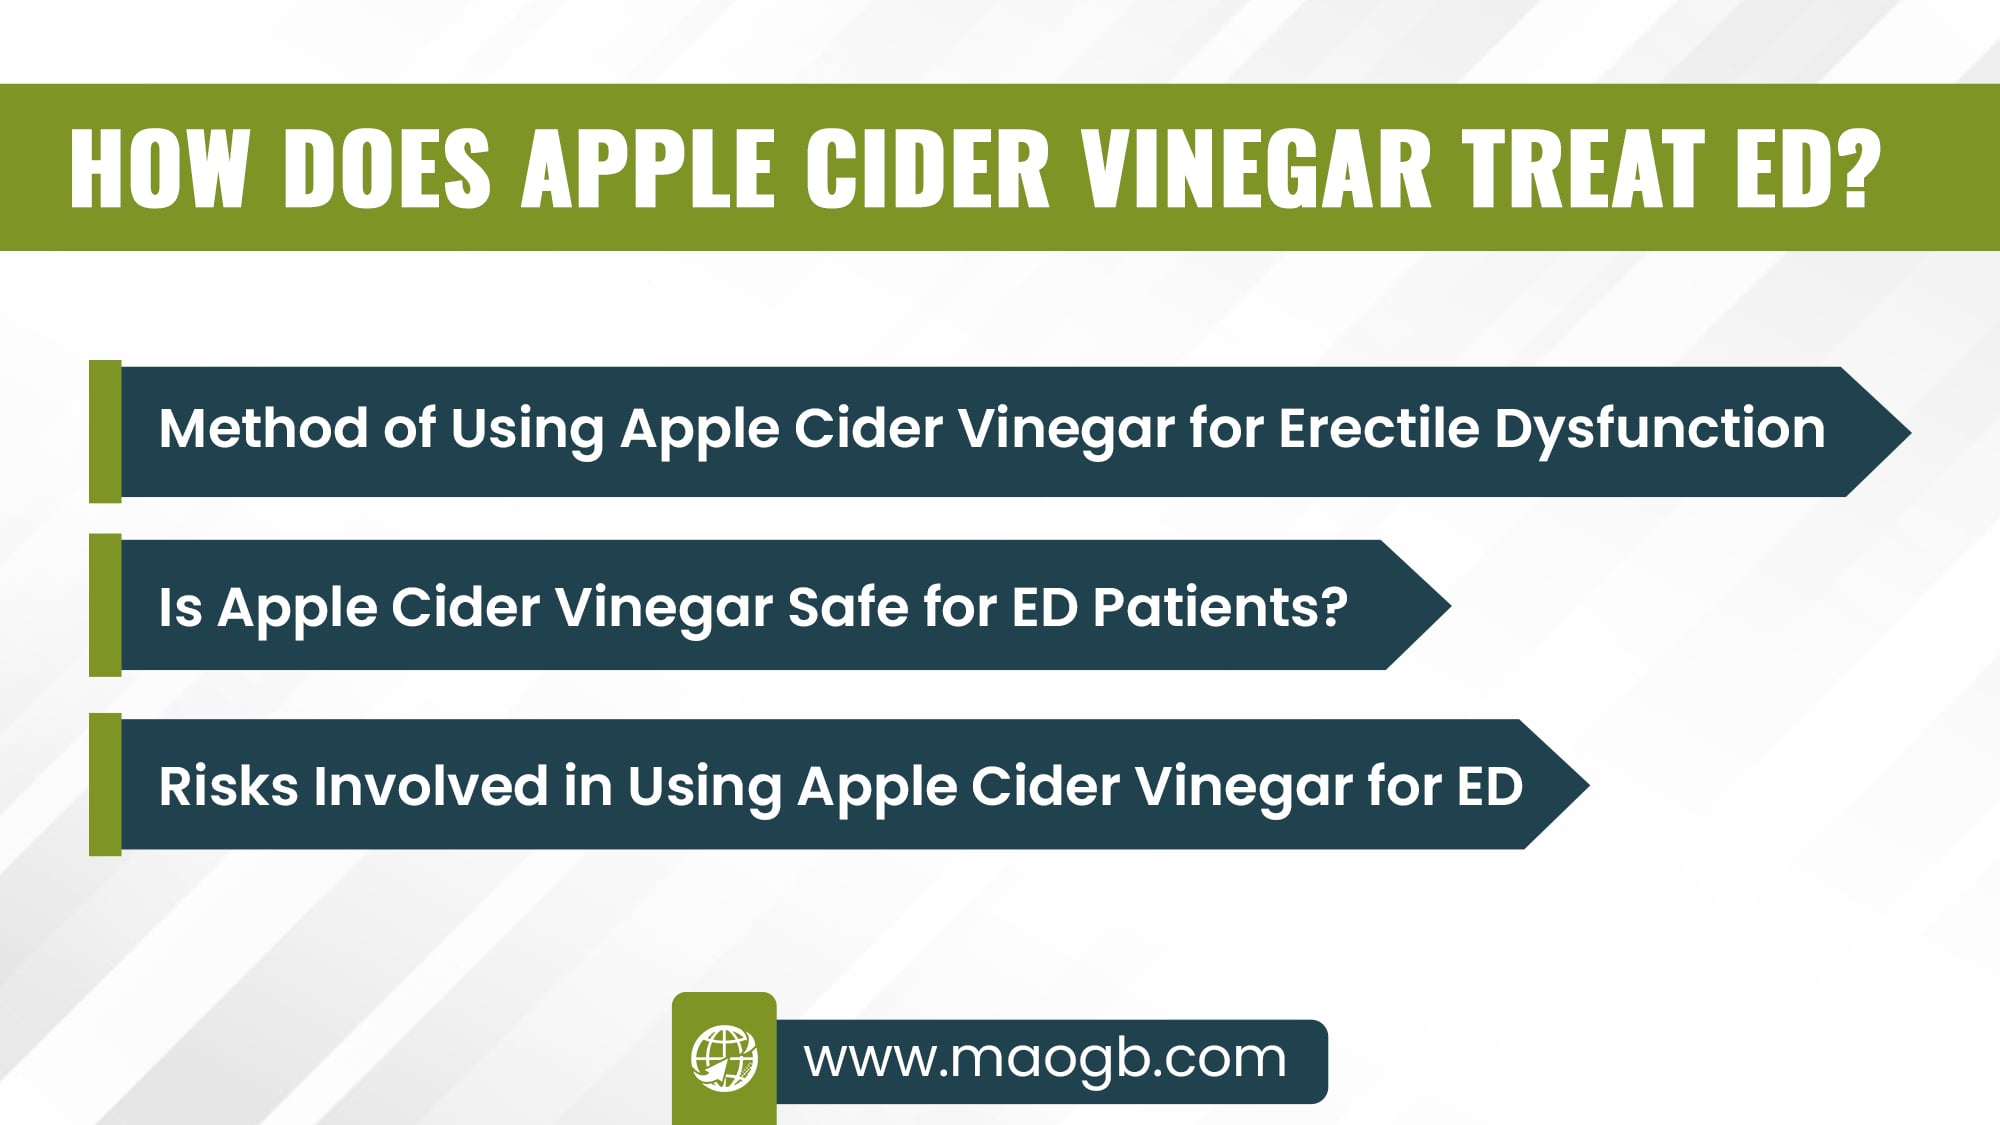 How Does Apple Cider Vinegar Treat ED